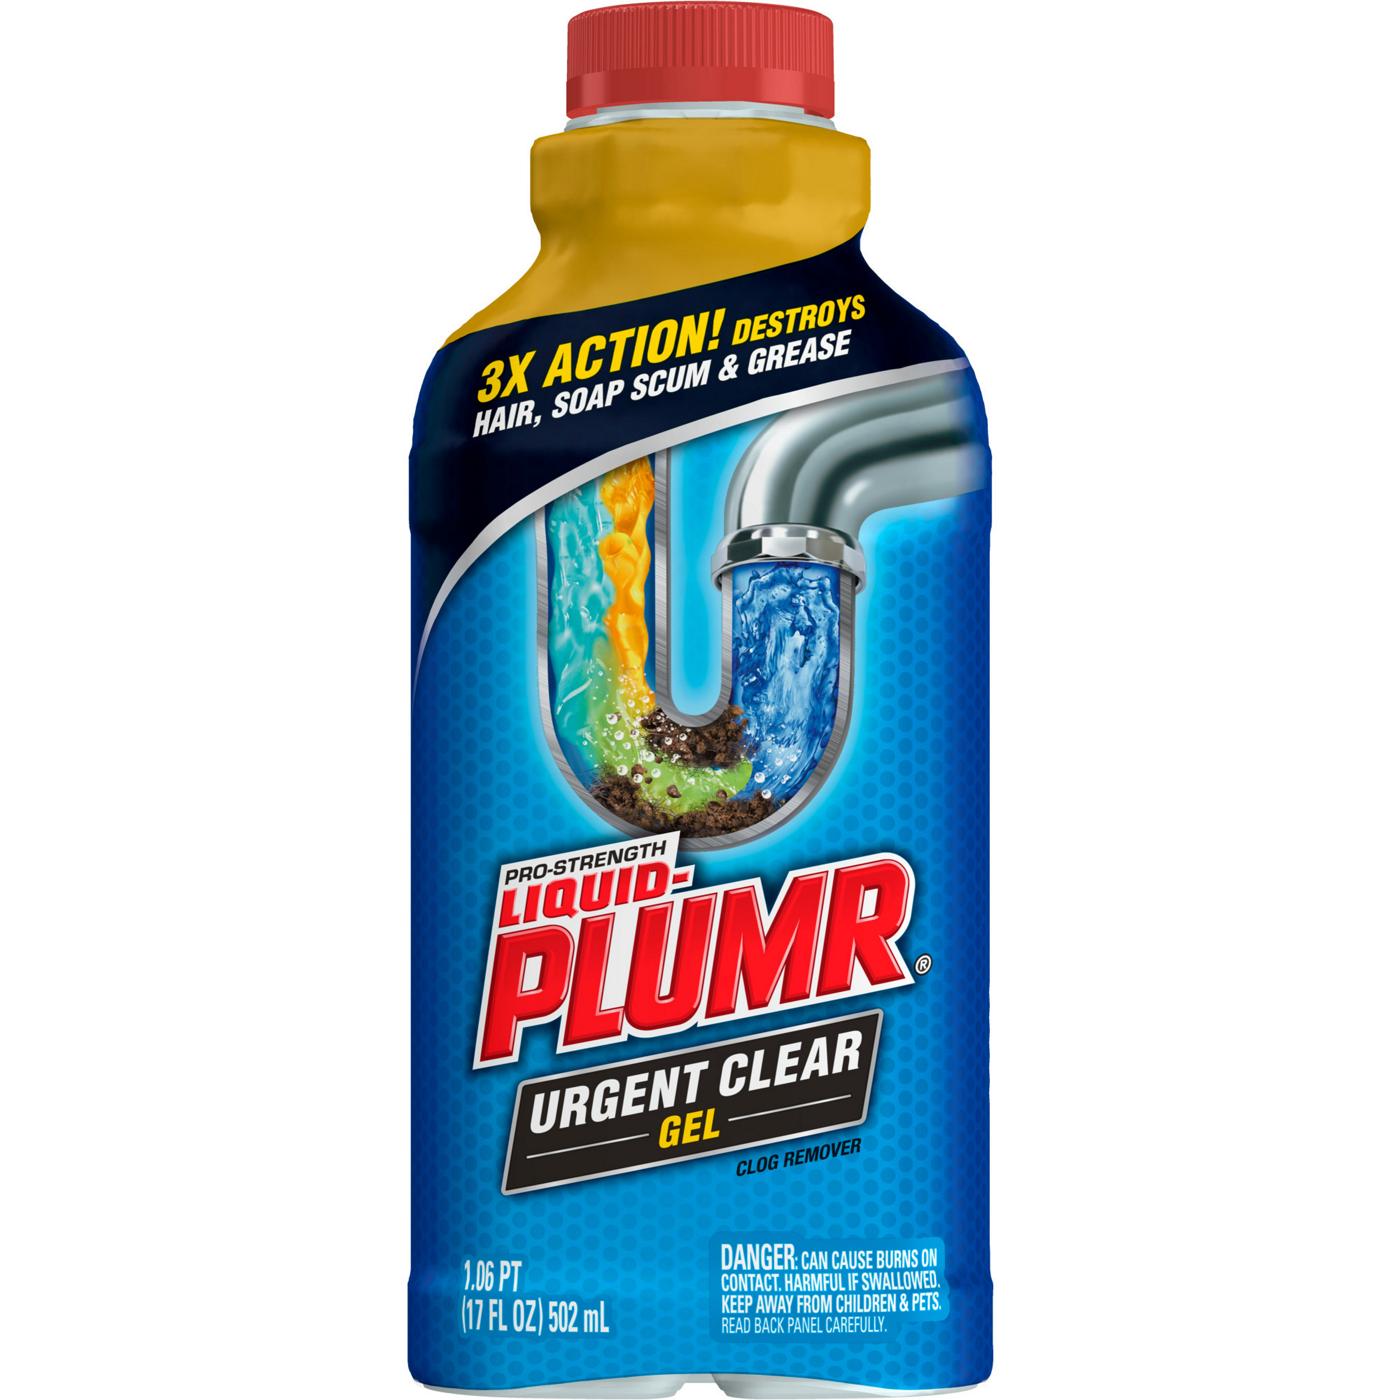 Liquid-Plumr Industrial Strength Urgent Clear, Liquid Drain Cleaner; image 1 of 5